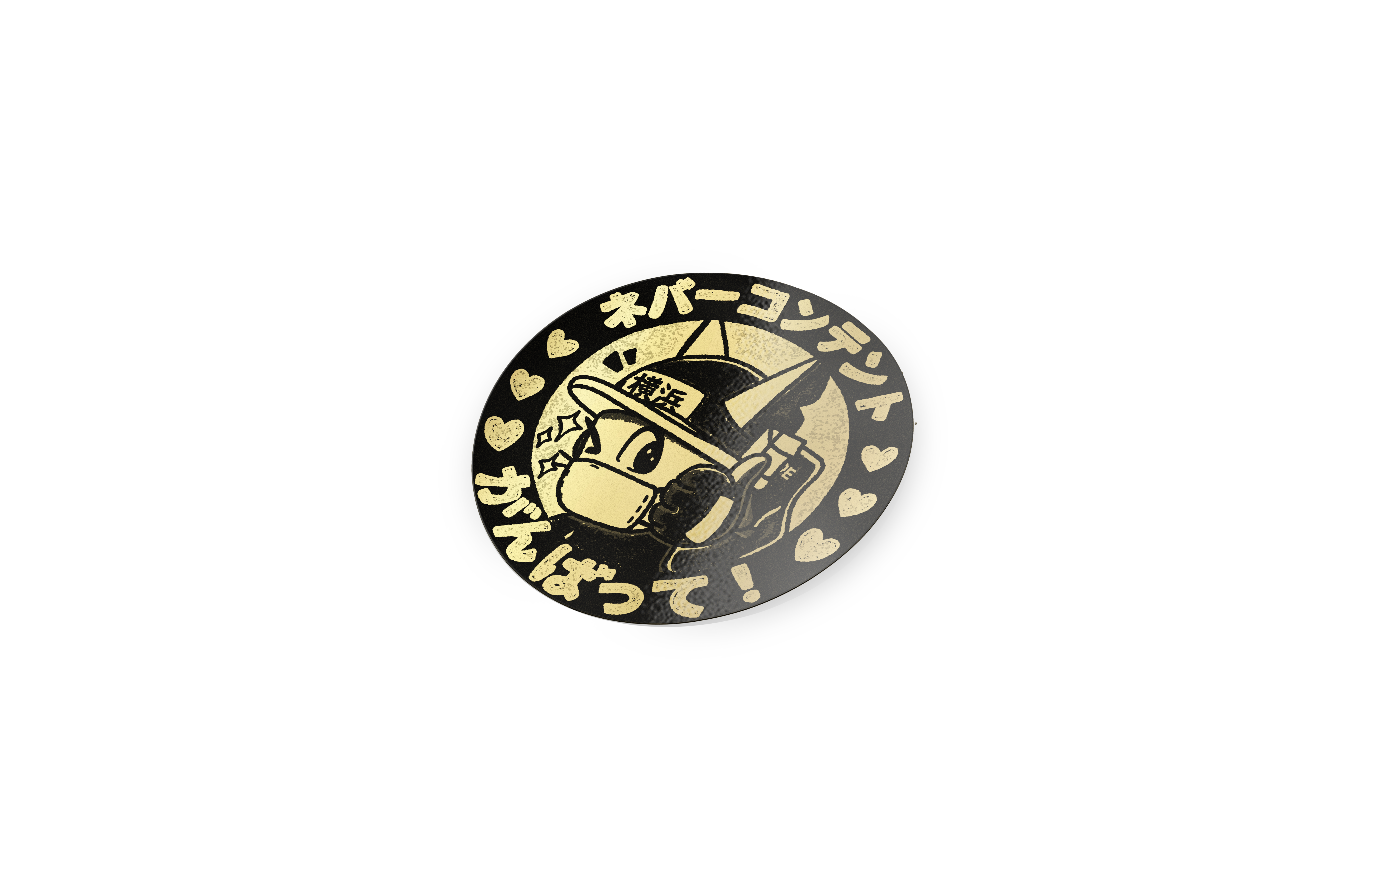 Do your best「がんばって！」 - Circle Sticker (Gold Chrome)